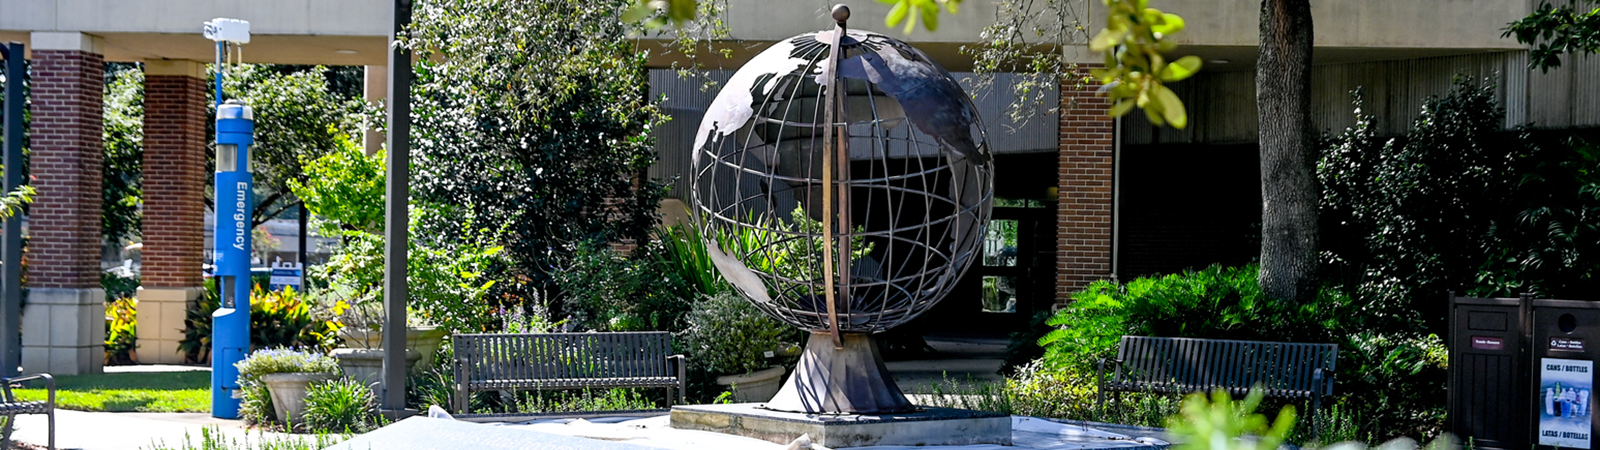 unf globe statue on campus